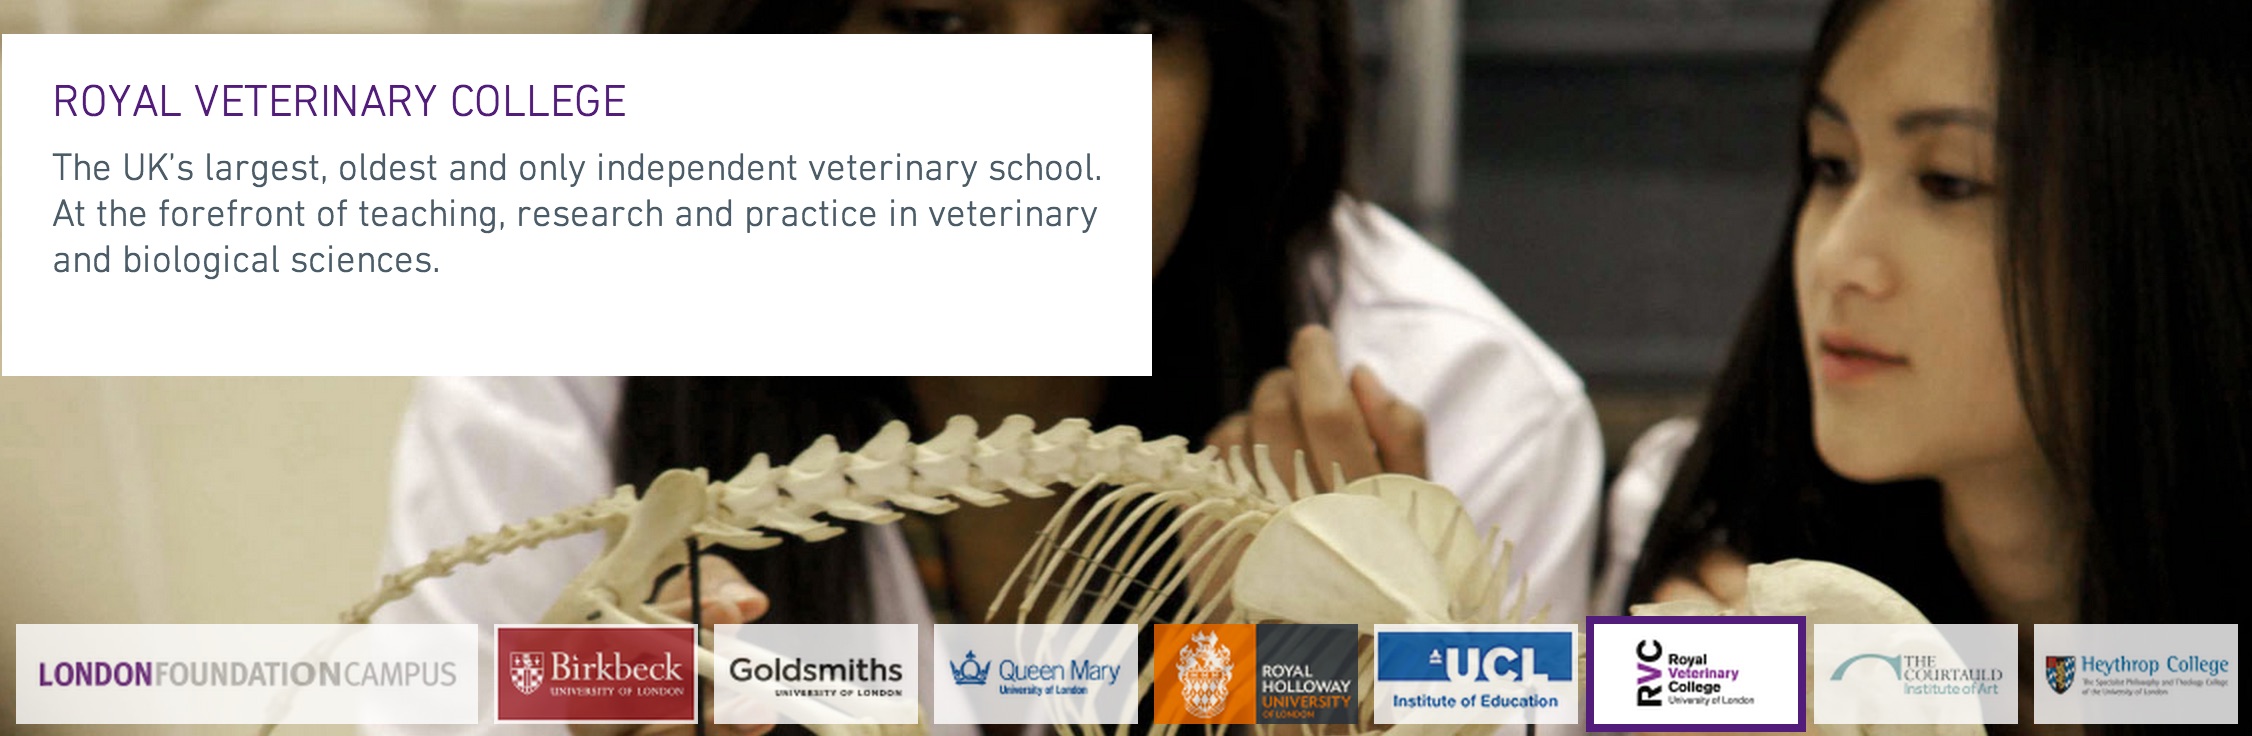 Progression_Degrees_-_Royal_Veterinary_College__University_of_London___London_FoundationCampus